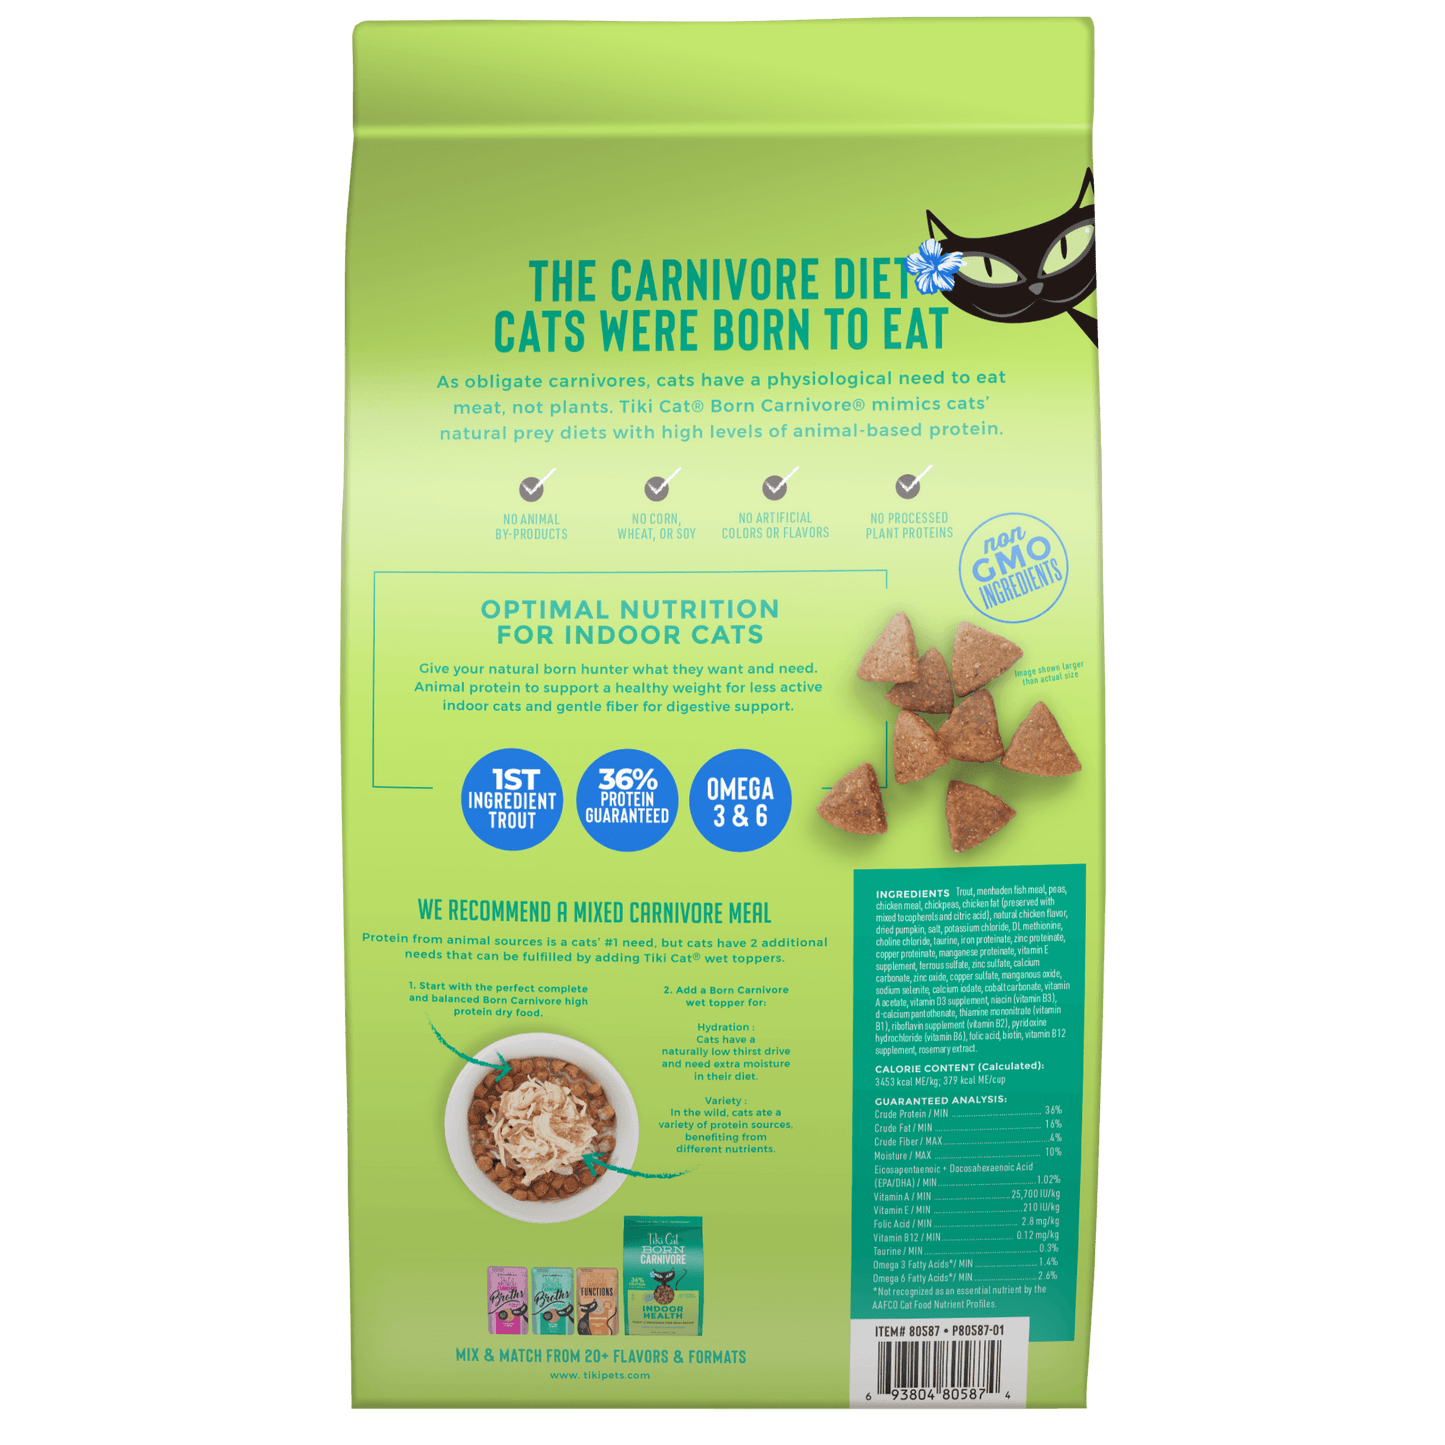 Tiki Cat® Born Carnivore™ Indoor Health: Trout and Menhaden Fish Meal Recipe